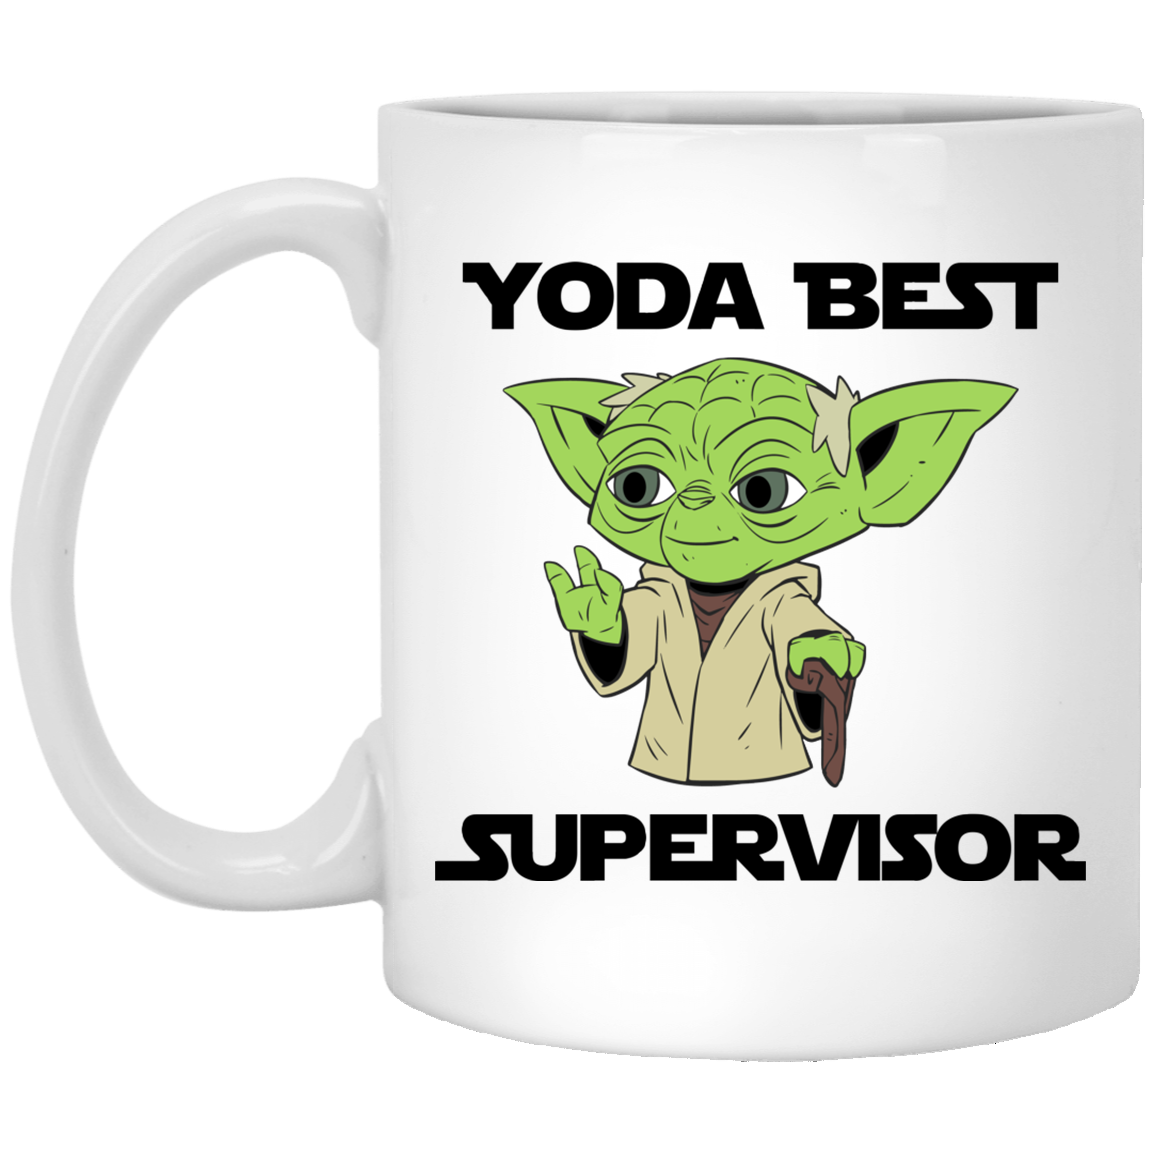 Yoda Best Supervisor Mug